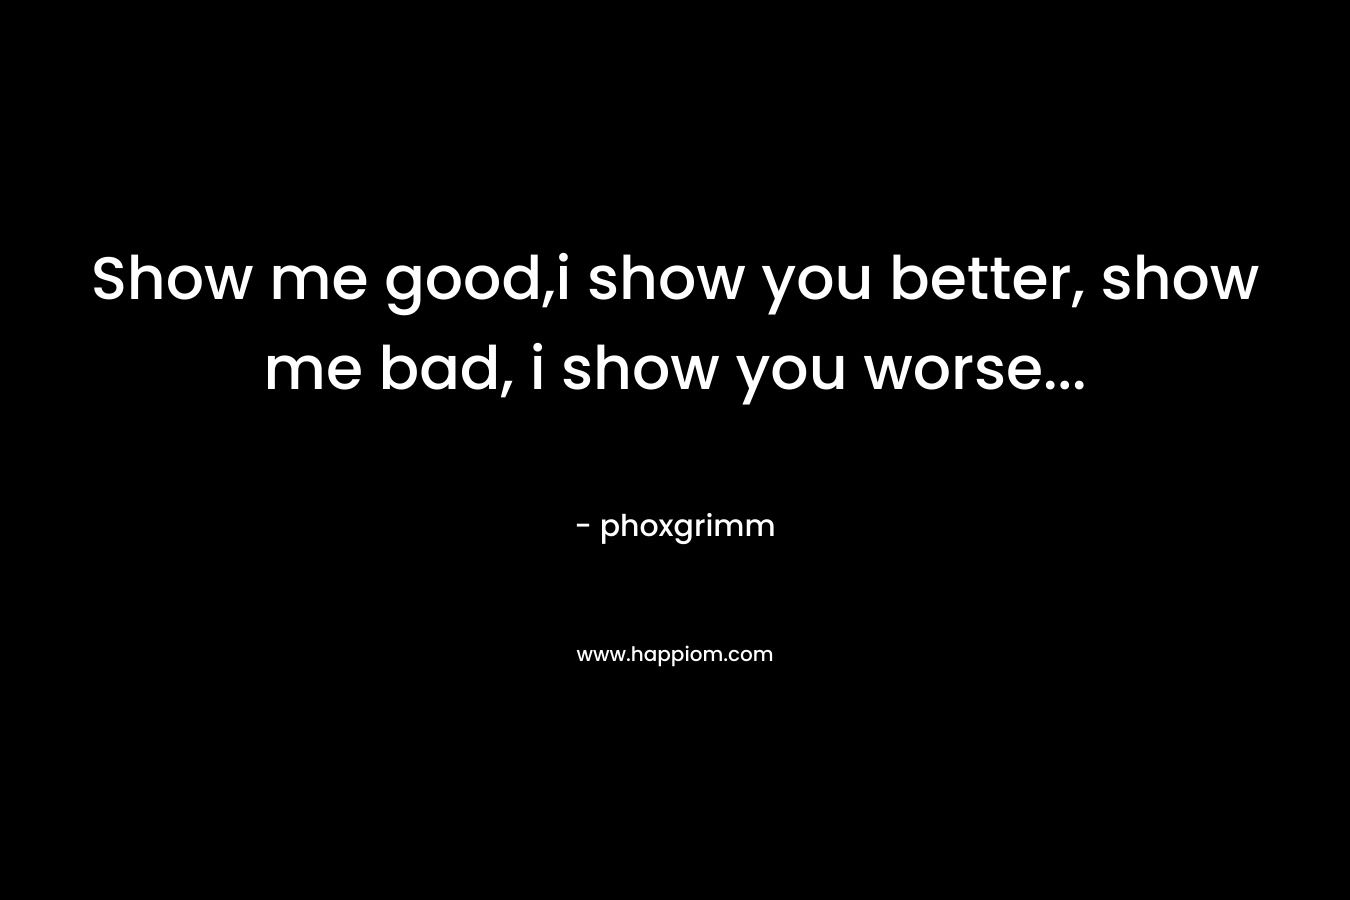 Show me good,i show you better, show me bad, i show you worse...